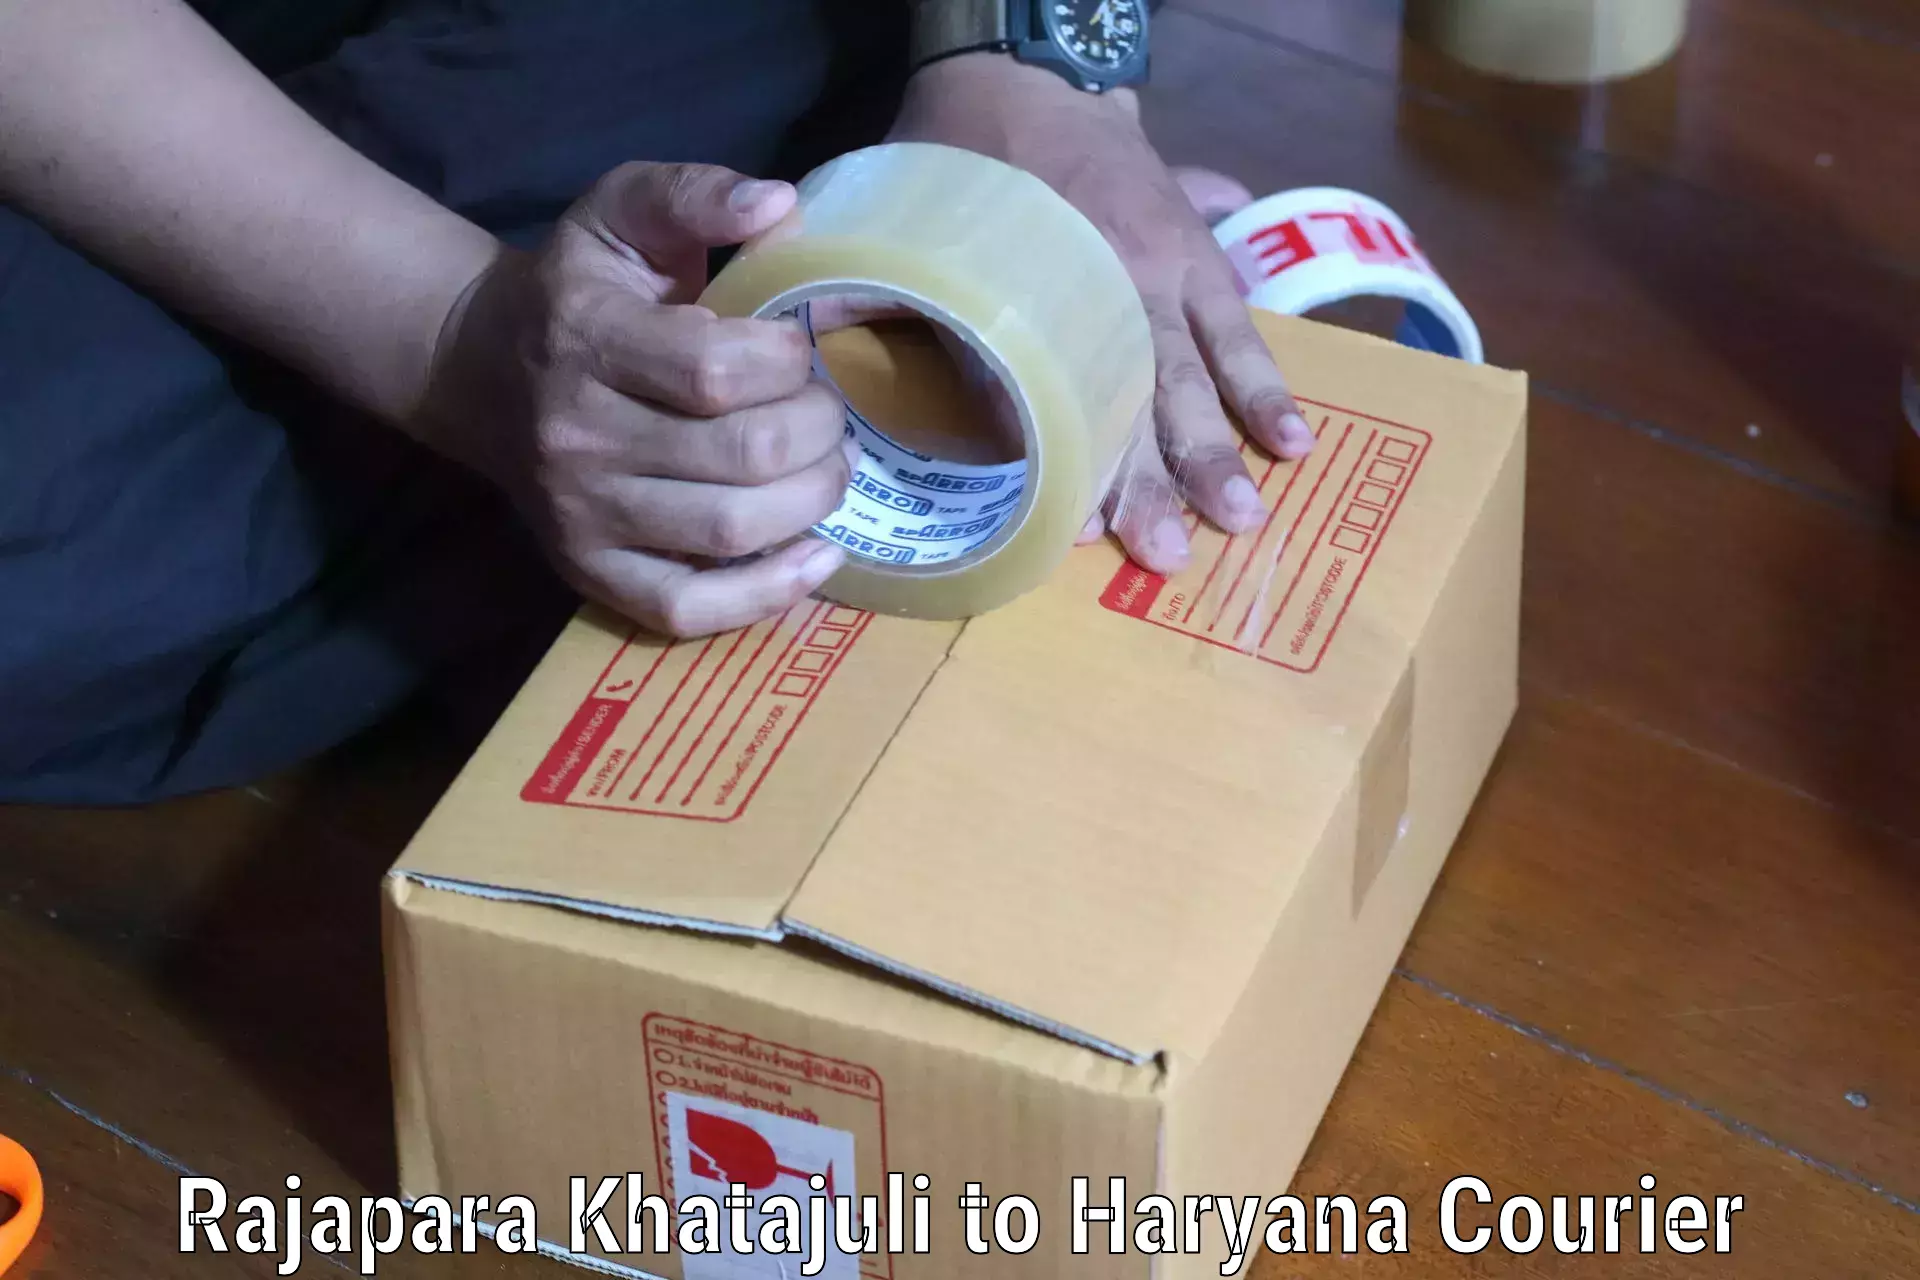 Courier service booking Rajapara Khatajuli to Hodal